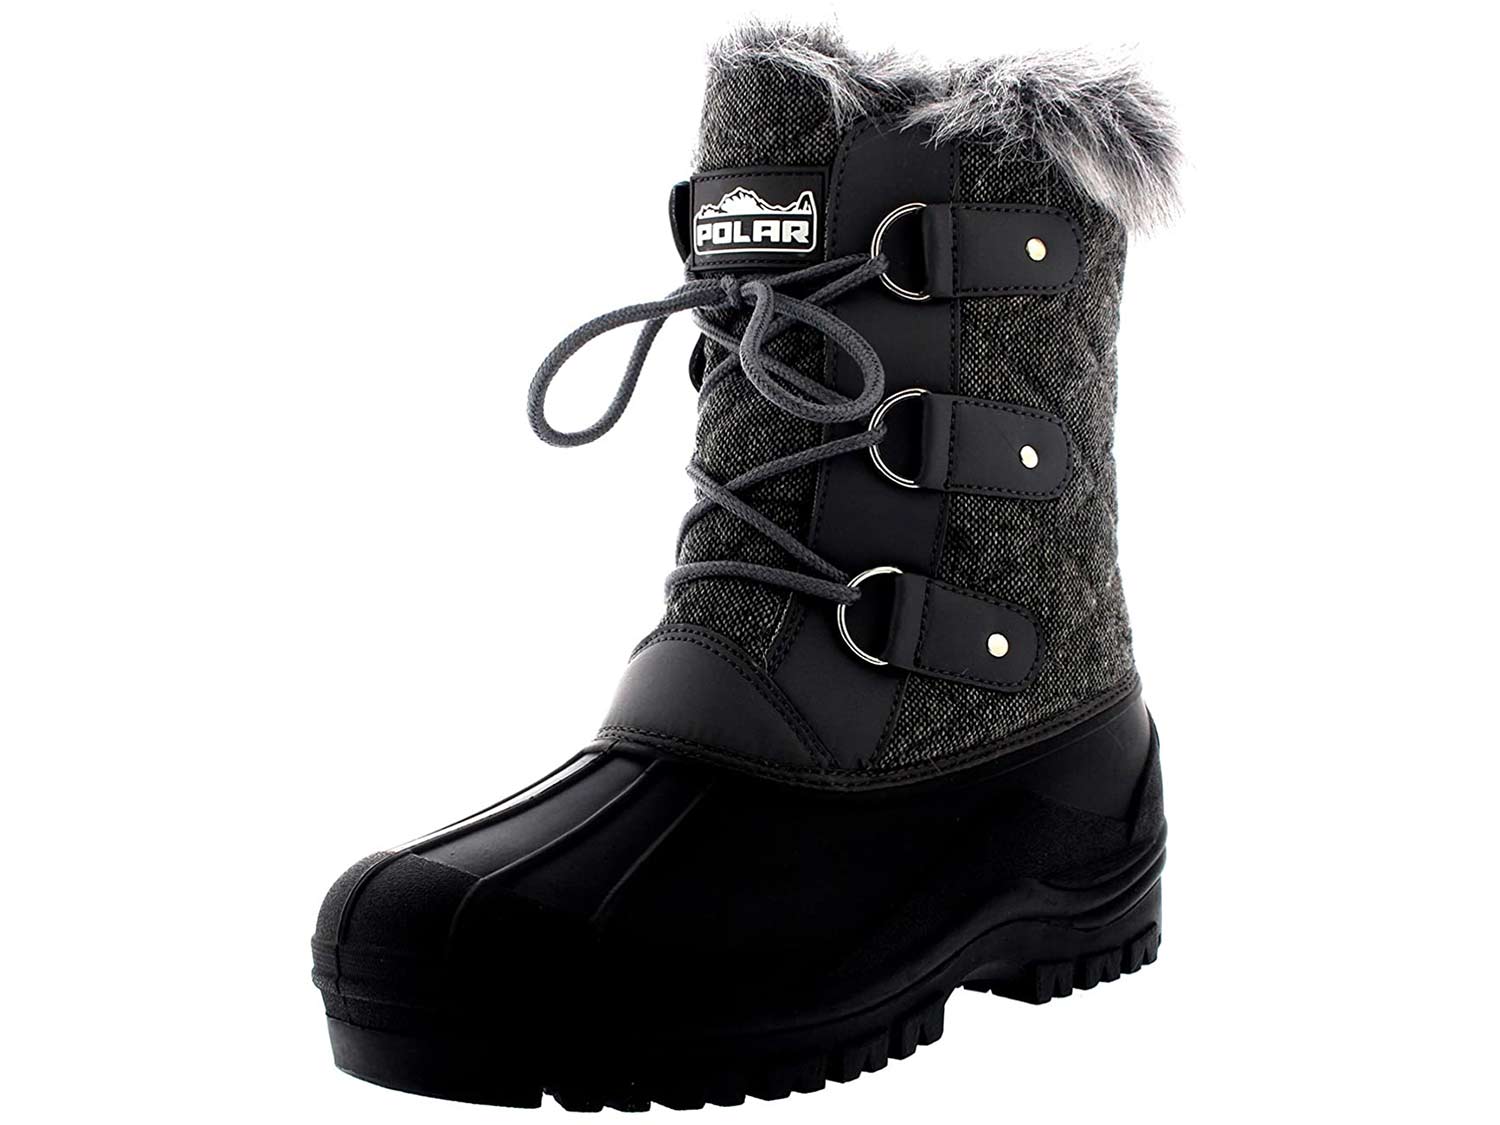 POLAR Womenâs Mid-Calf Mountain Walking Tactical Boots